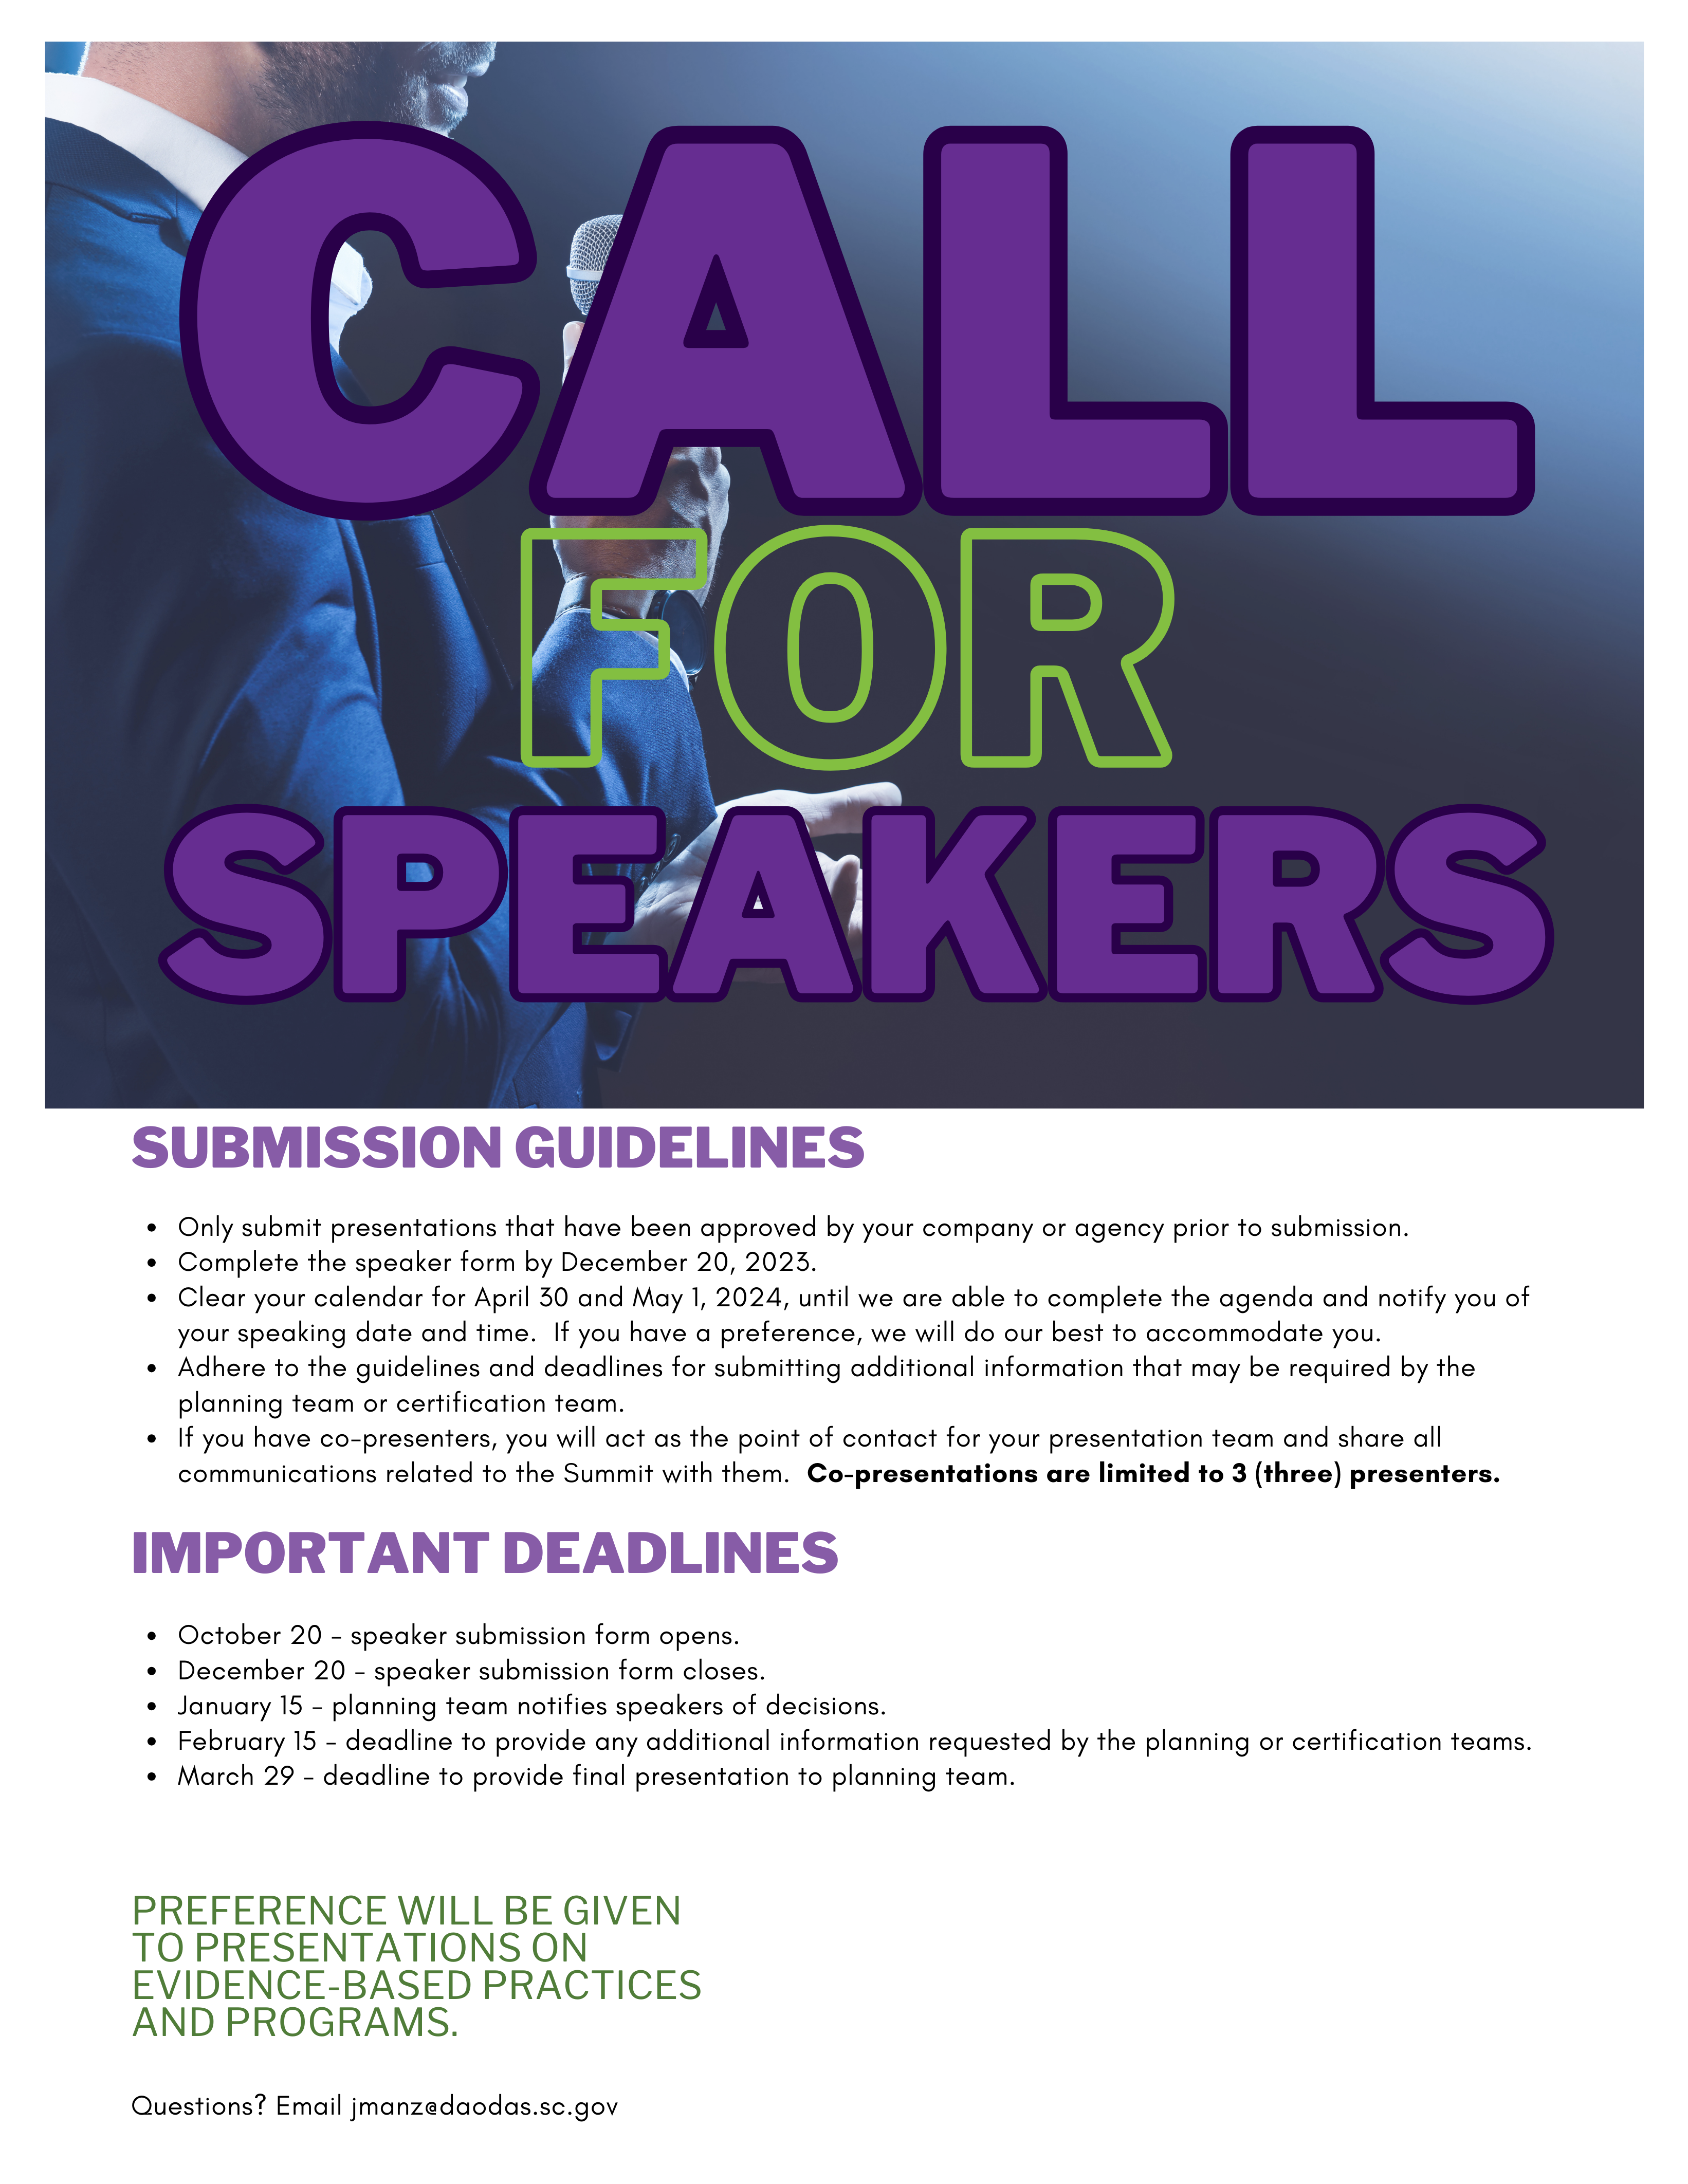 Call for Speakers website